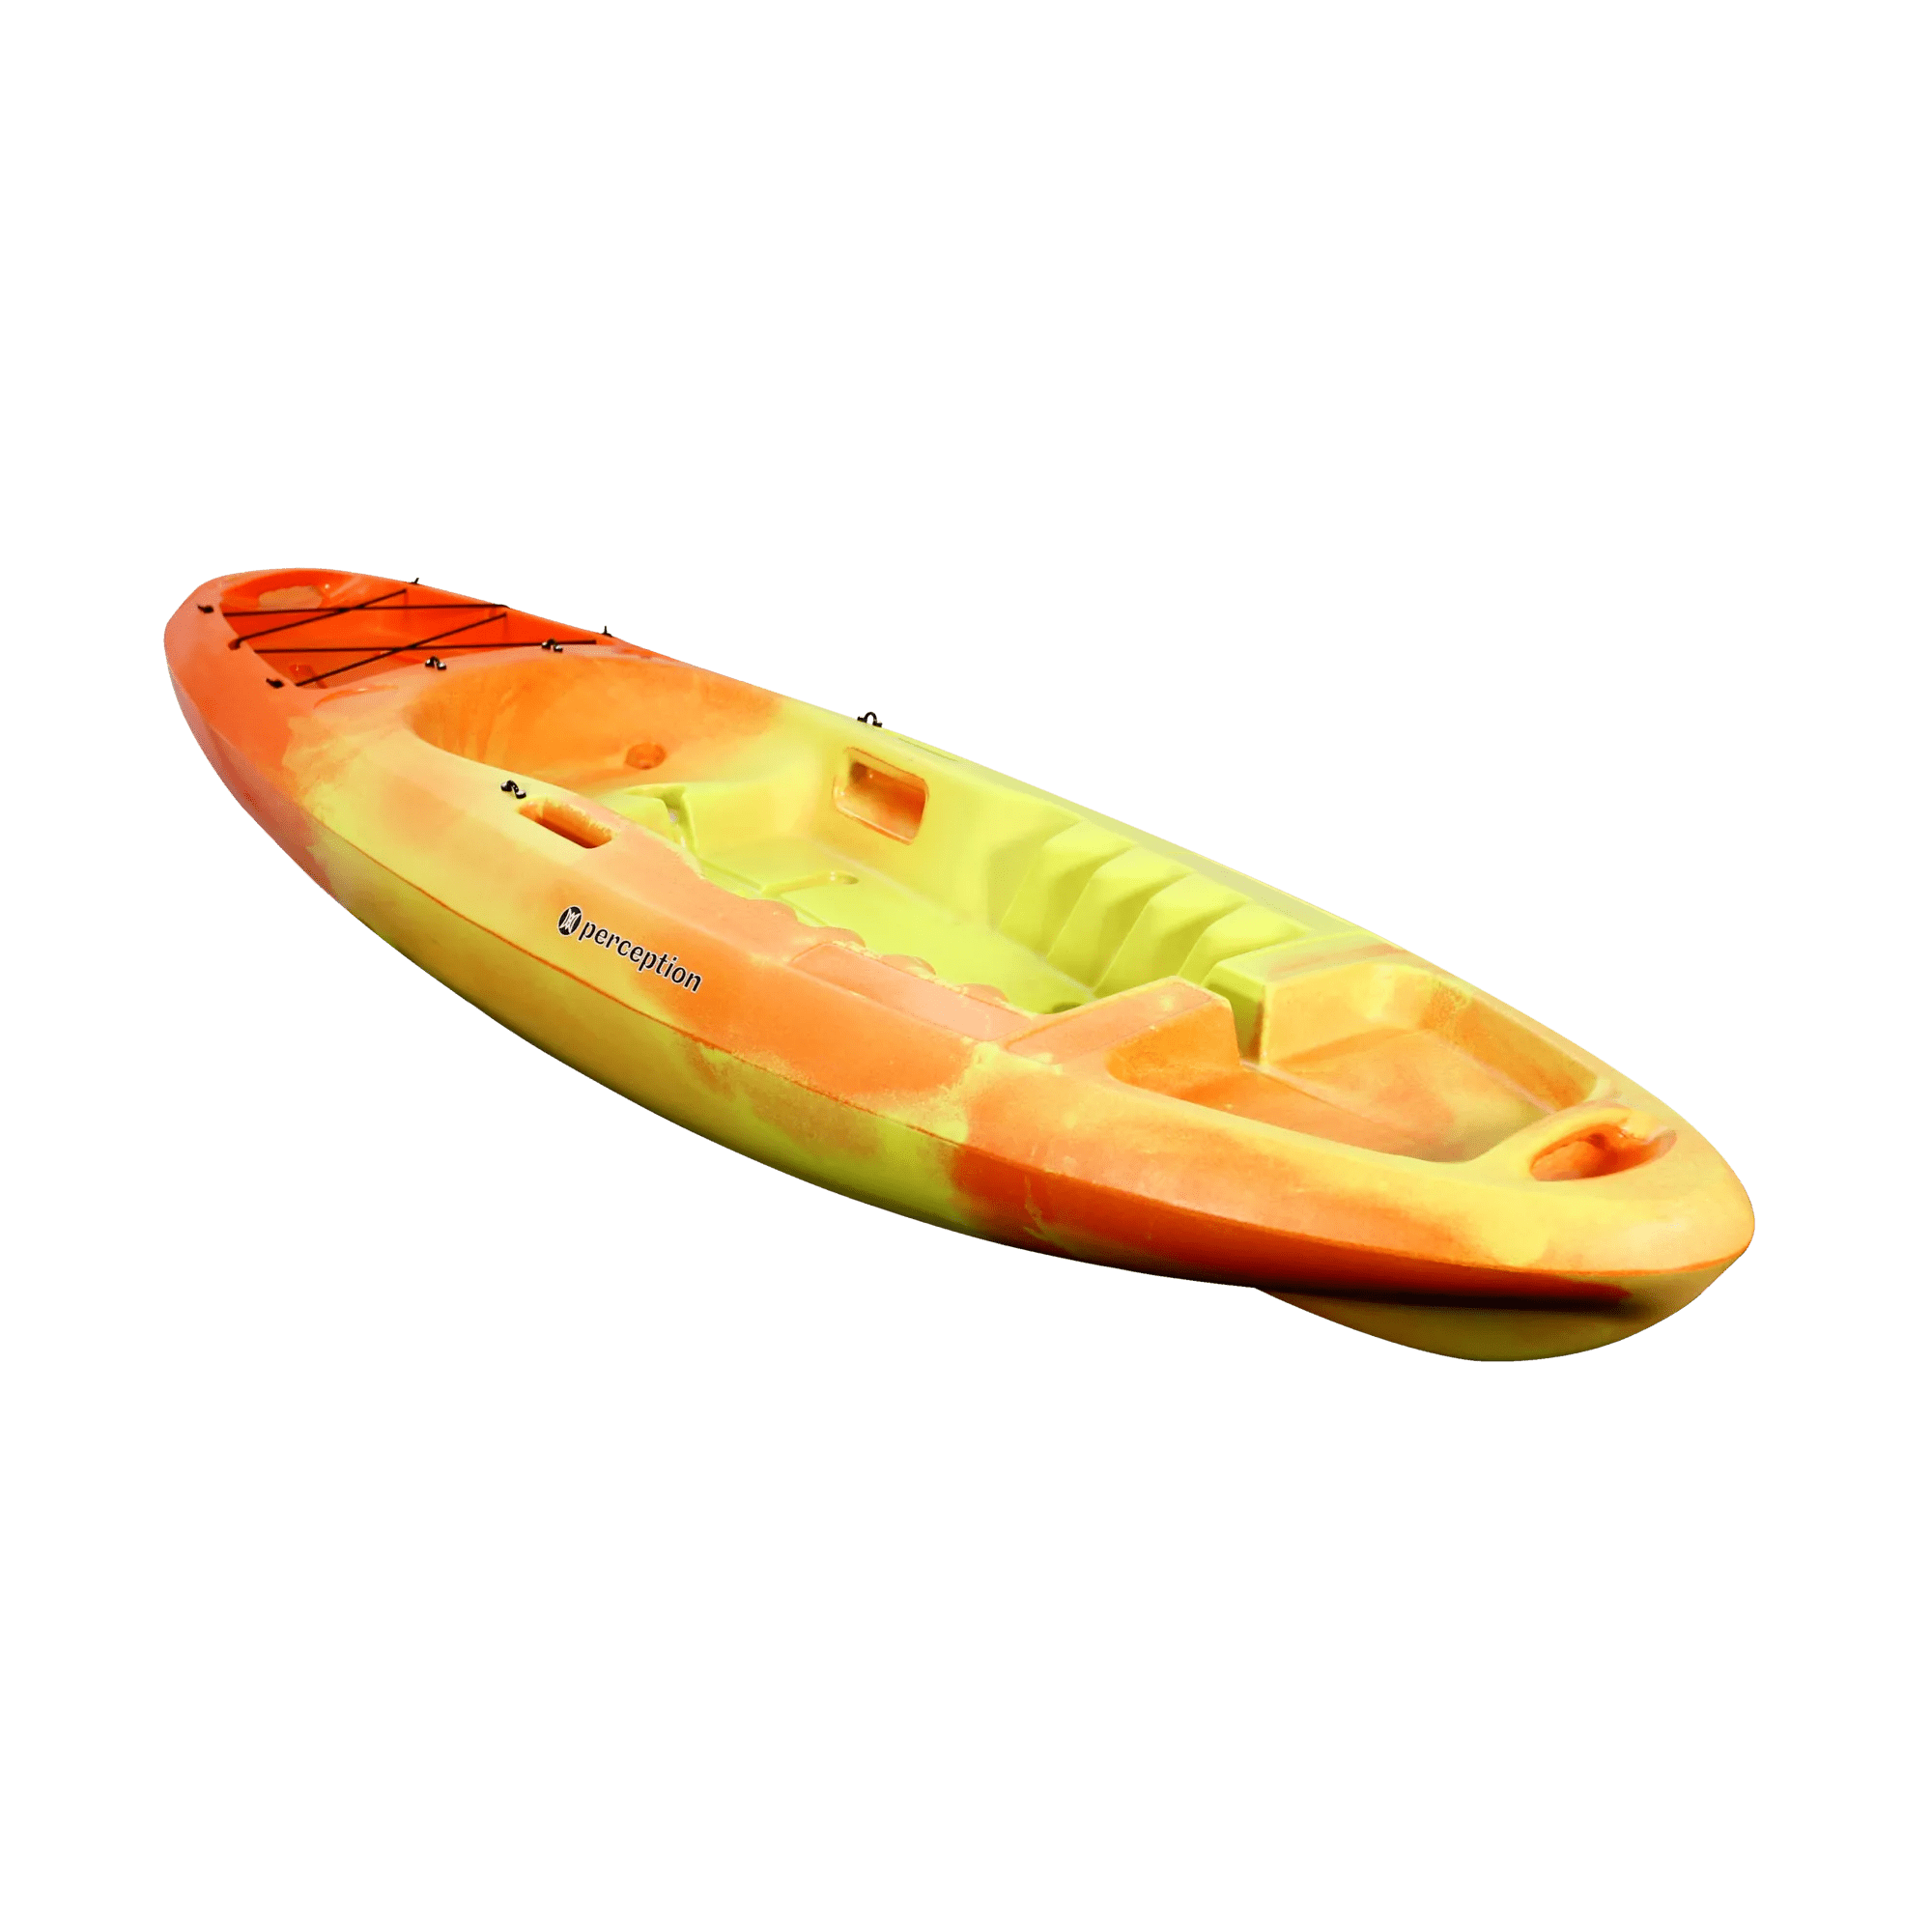 PERCEPTION - Zip 9.5 Recreational Kayak -  - 9351890189 - ISO